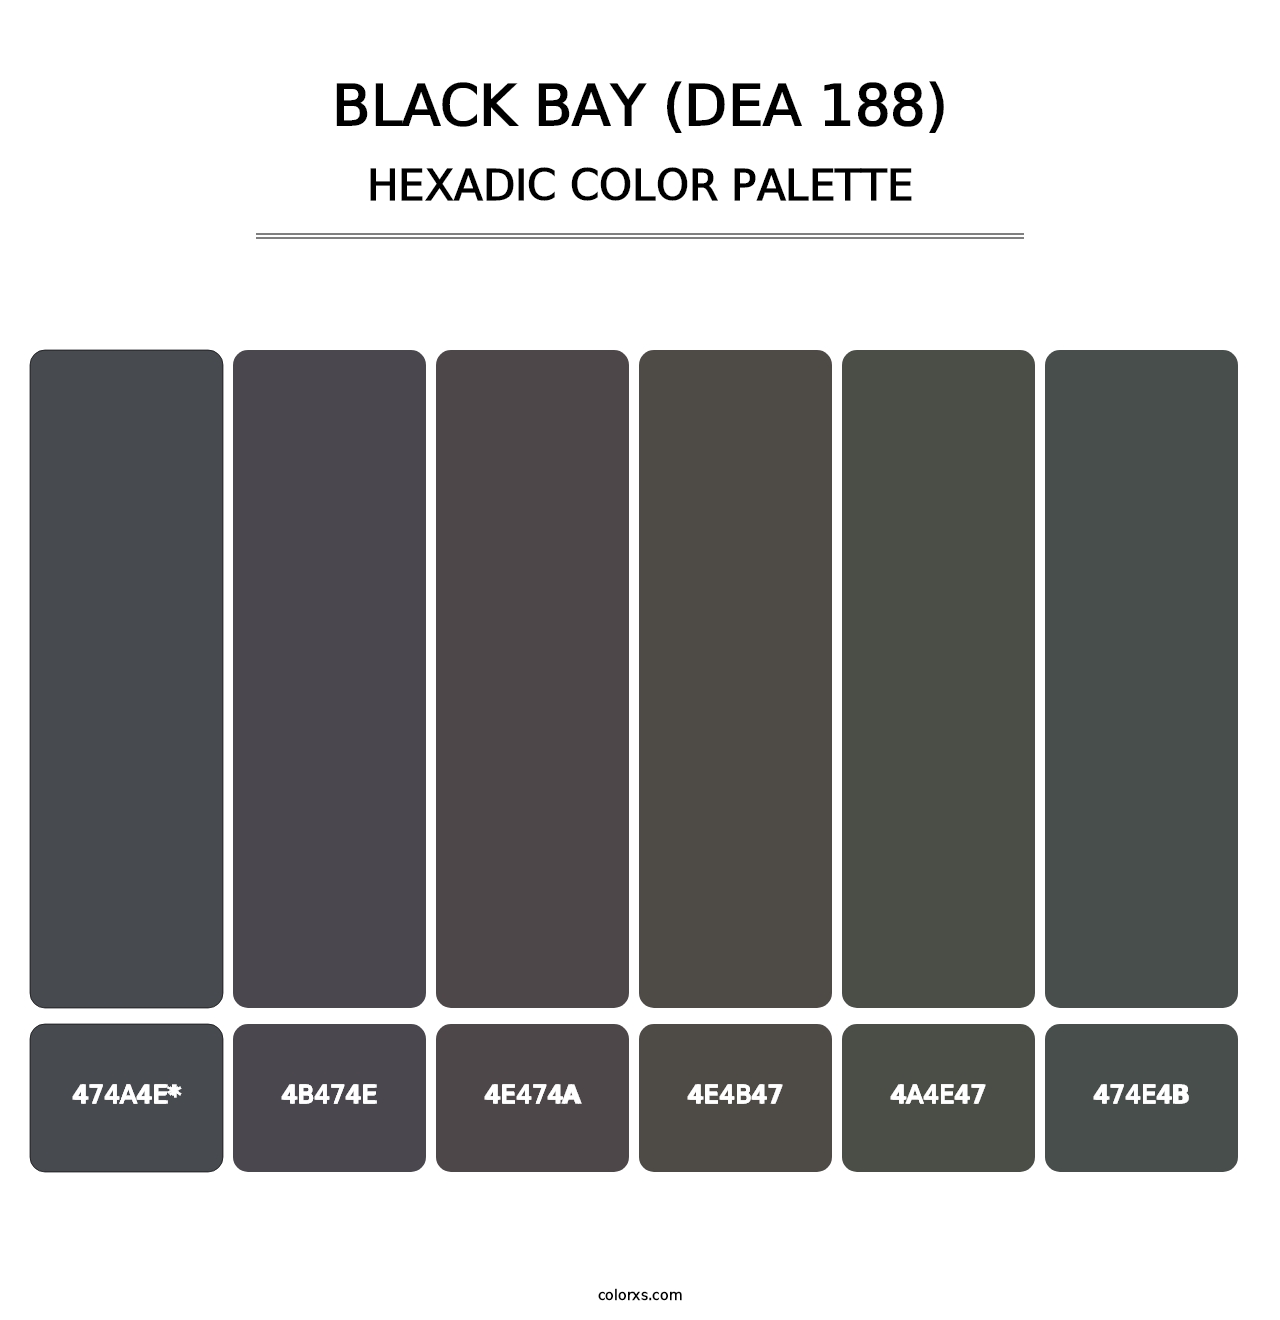 Black Bay (DEA 188) - Hexadic Color Palette